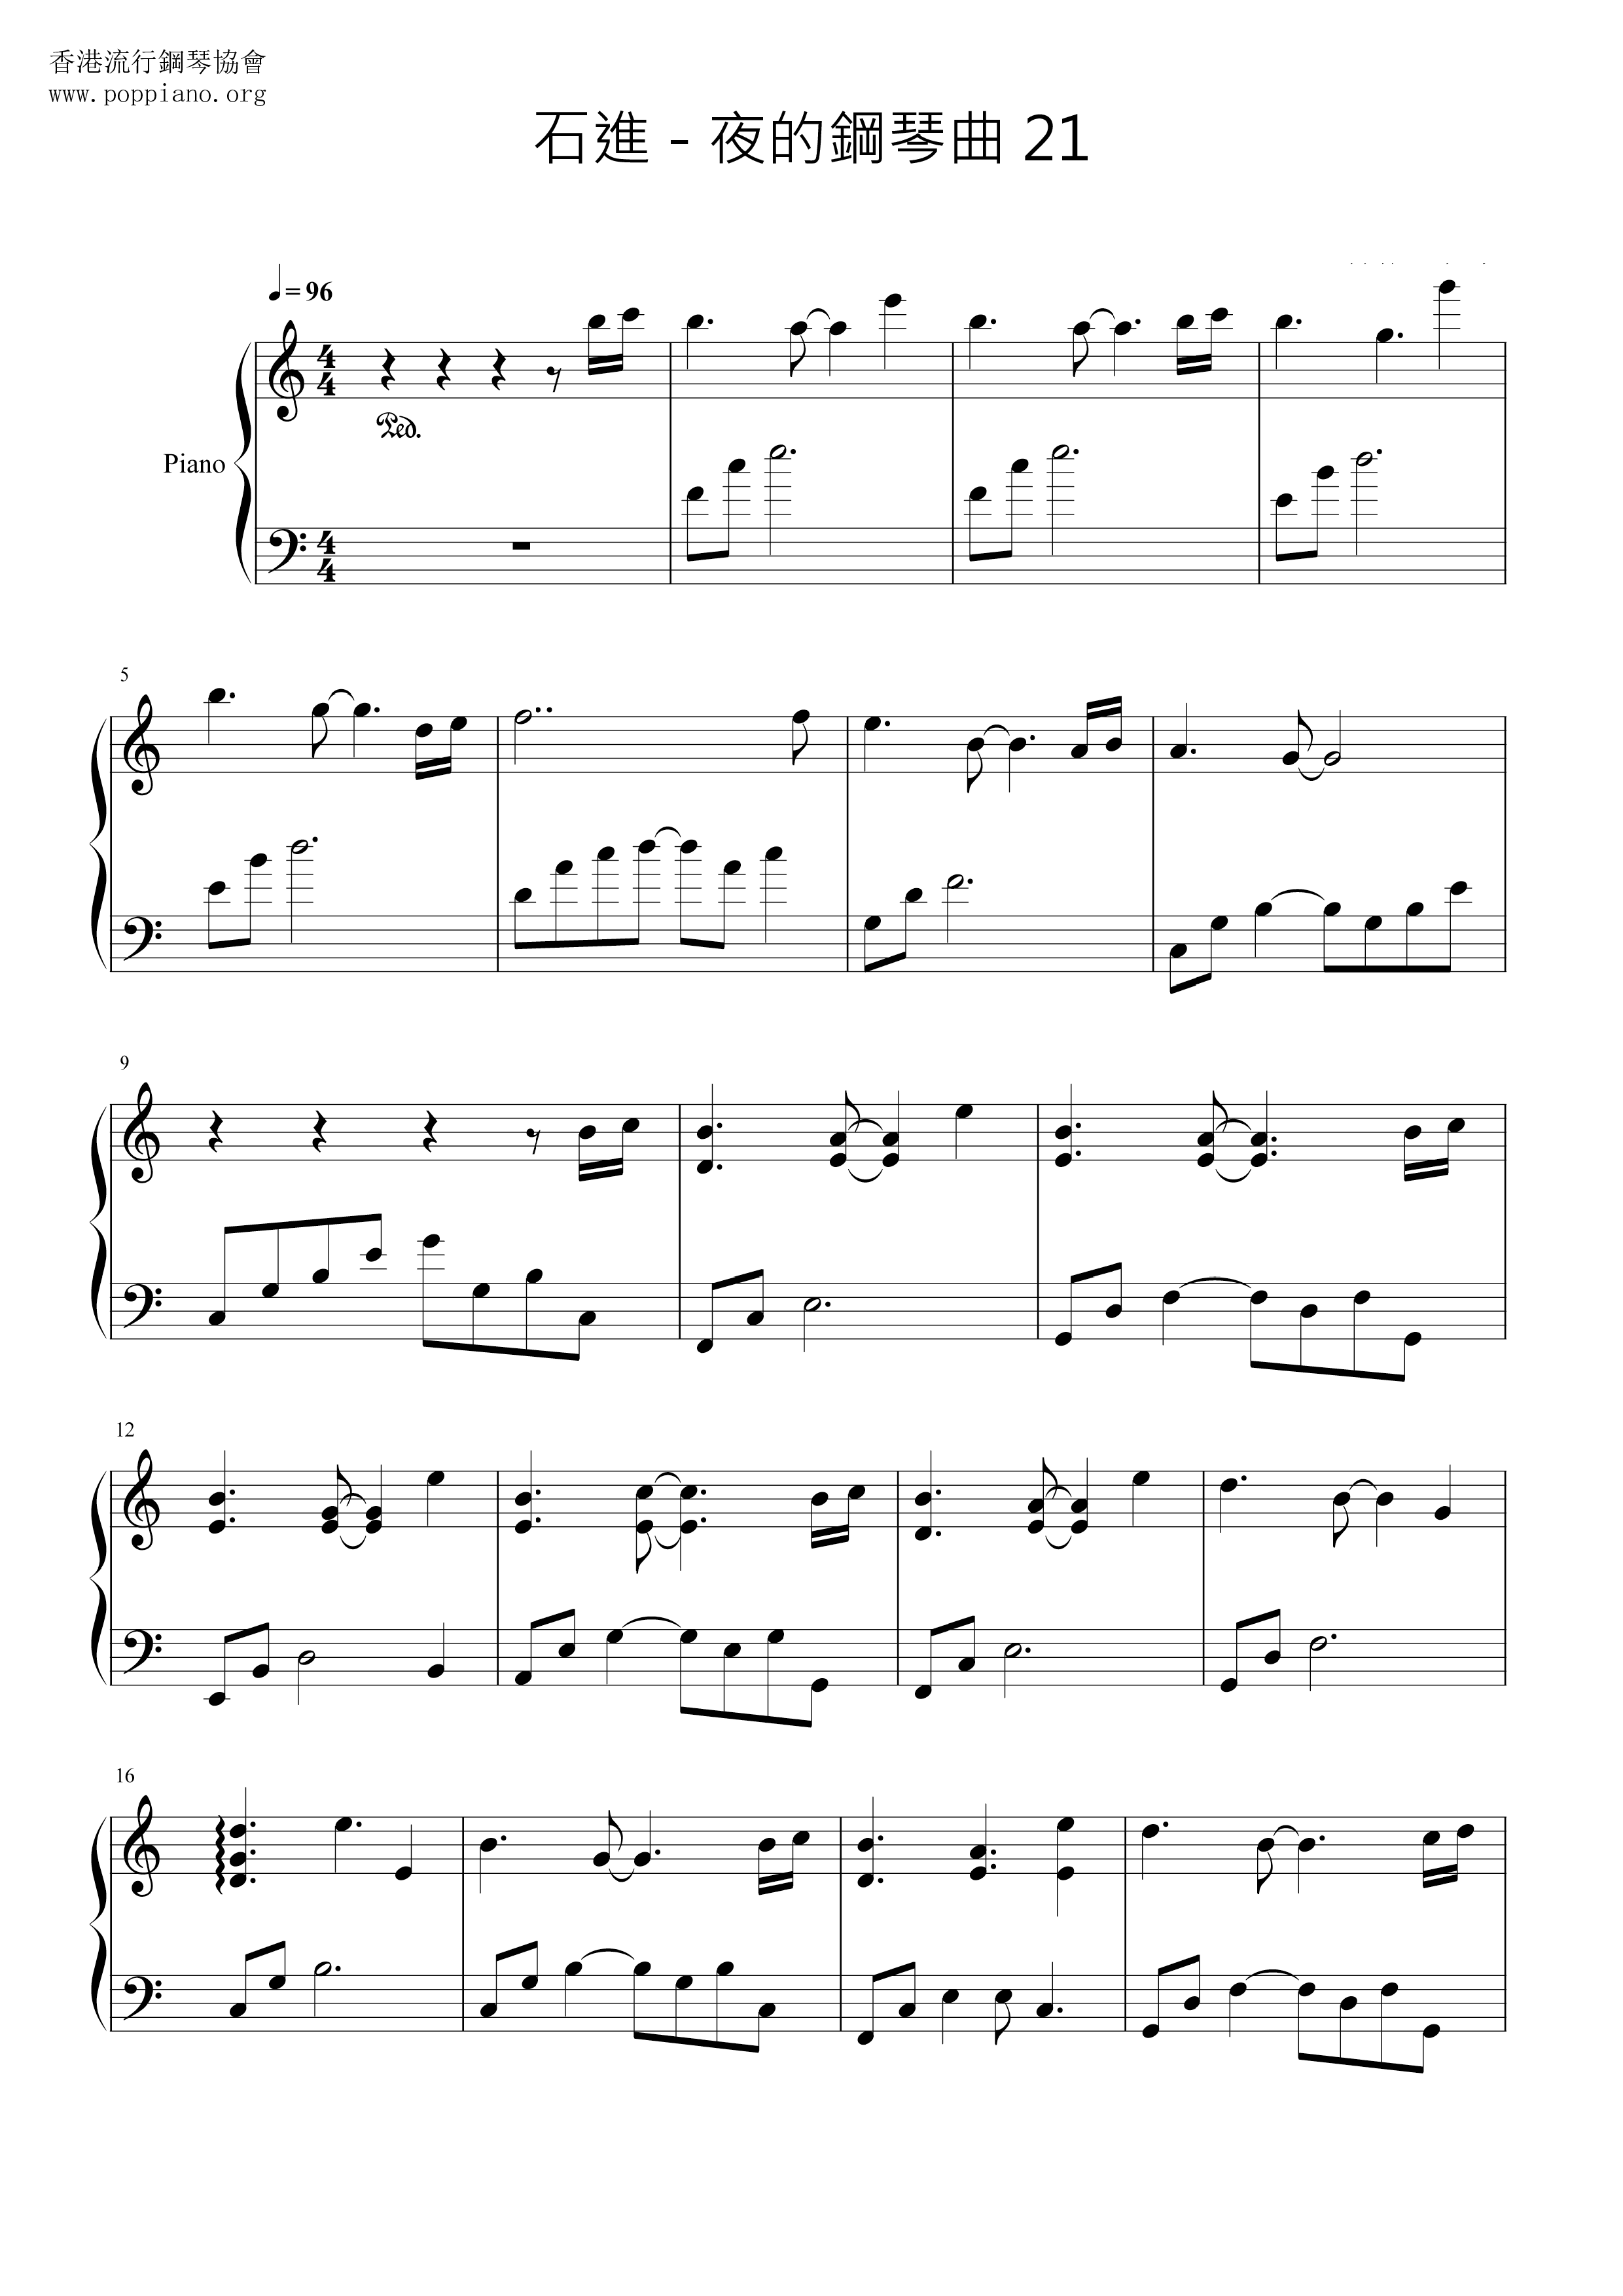 Melody Of The Night 21 Score